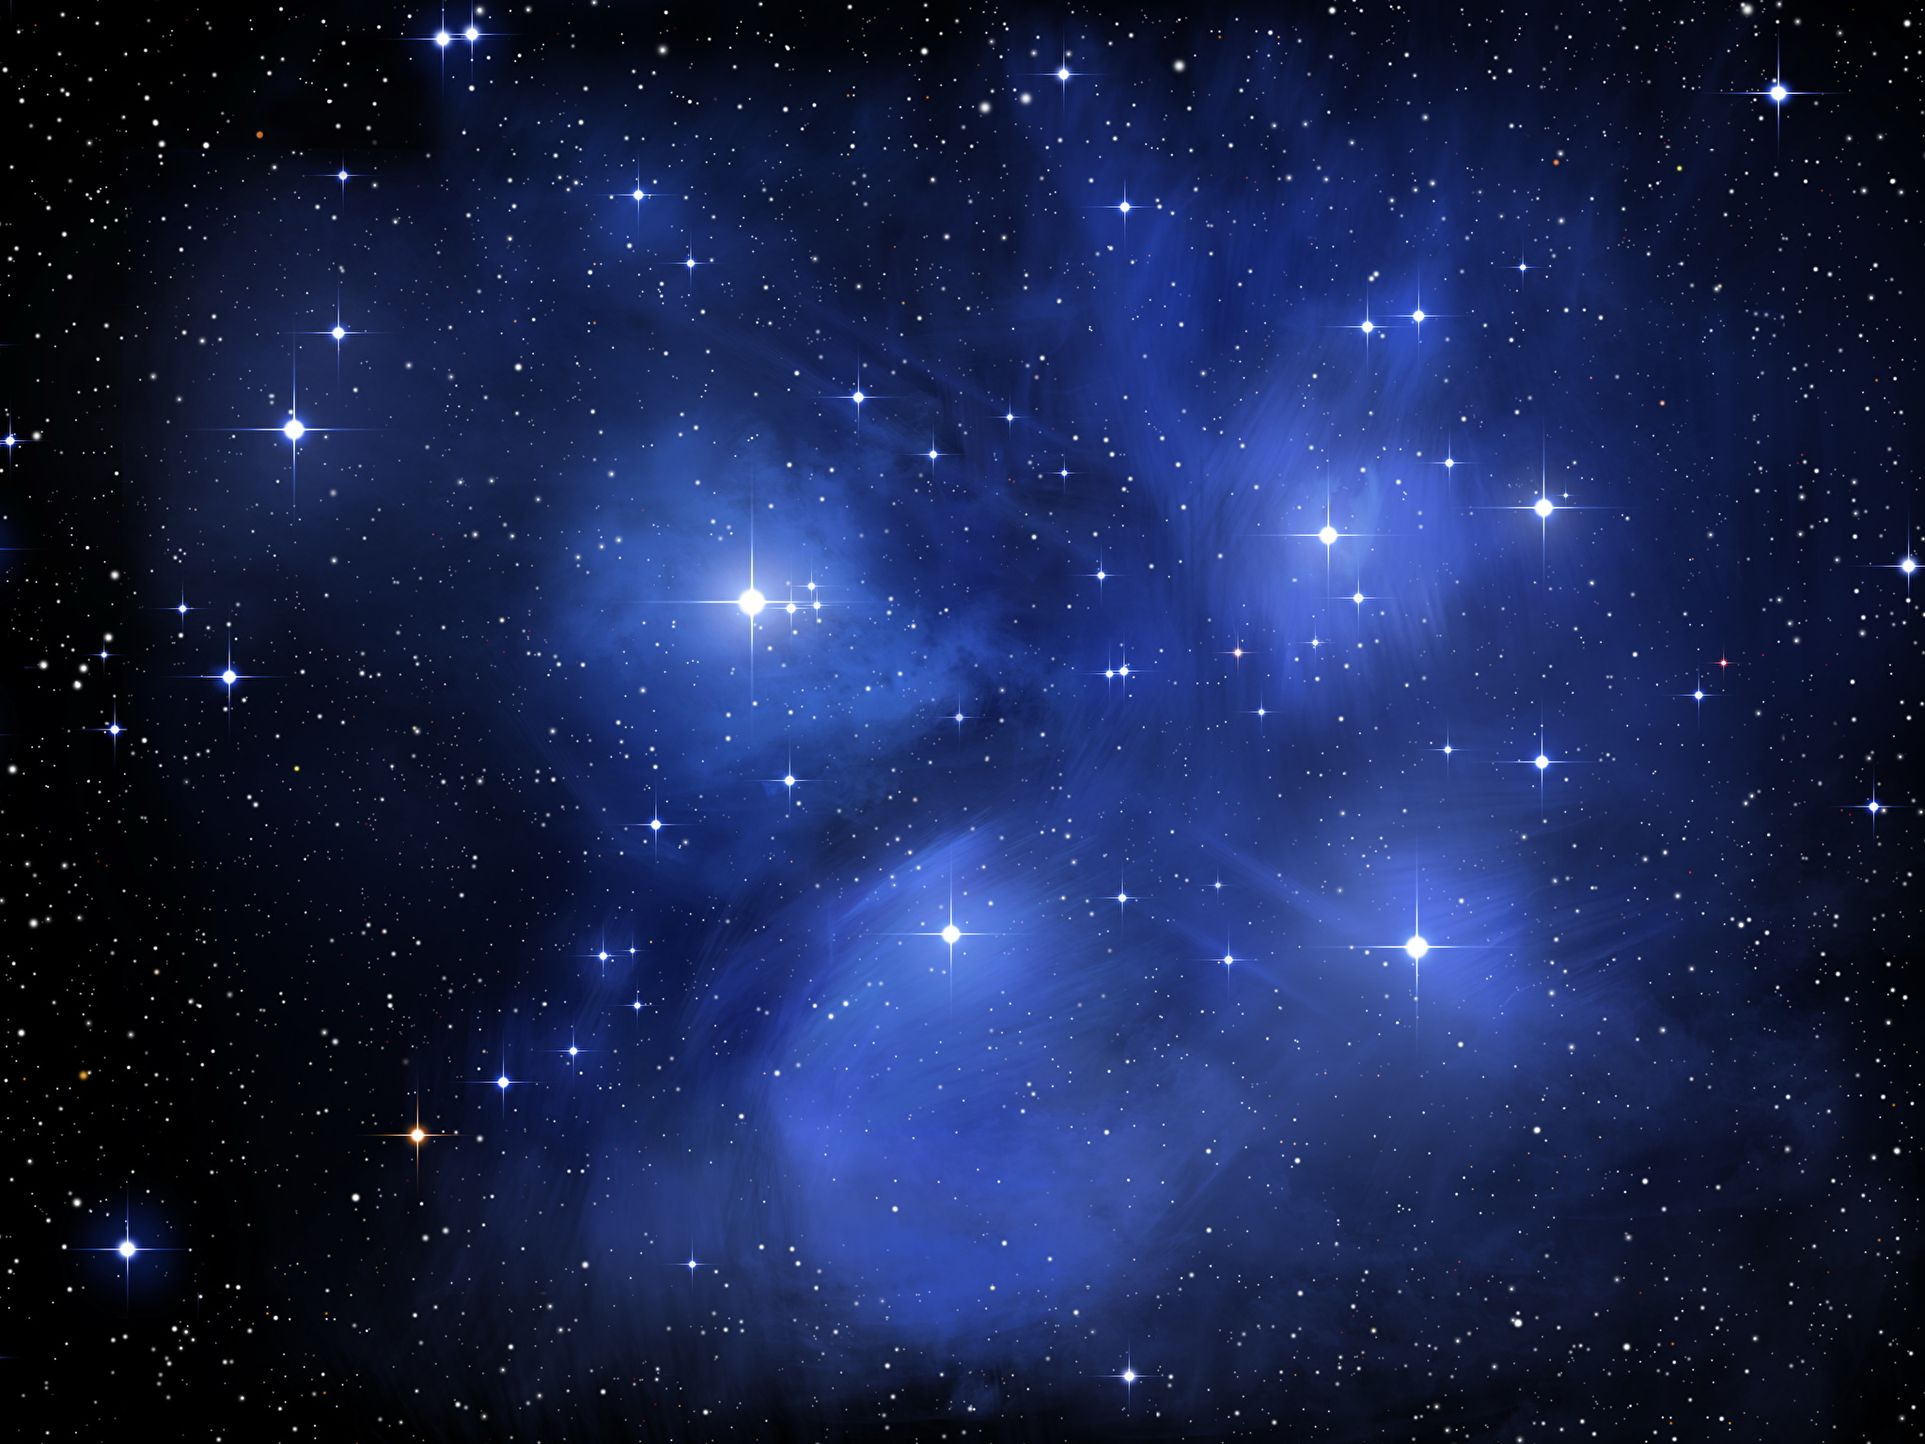 Гиада Созвездие. Созвездие Плеяды. М45 Плеяды. Стожары Созвездие. Космические звезды картинки